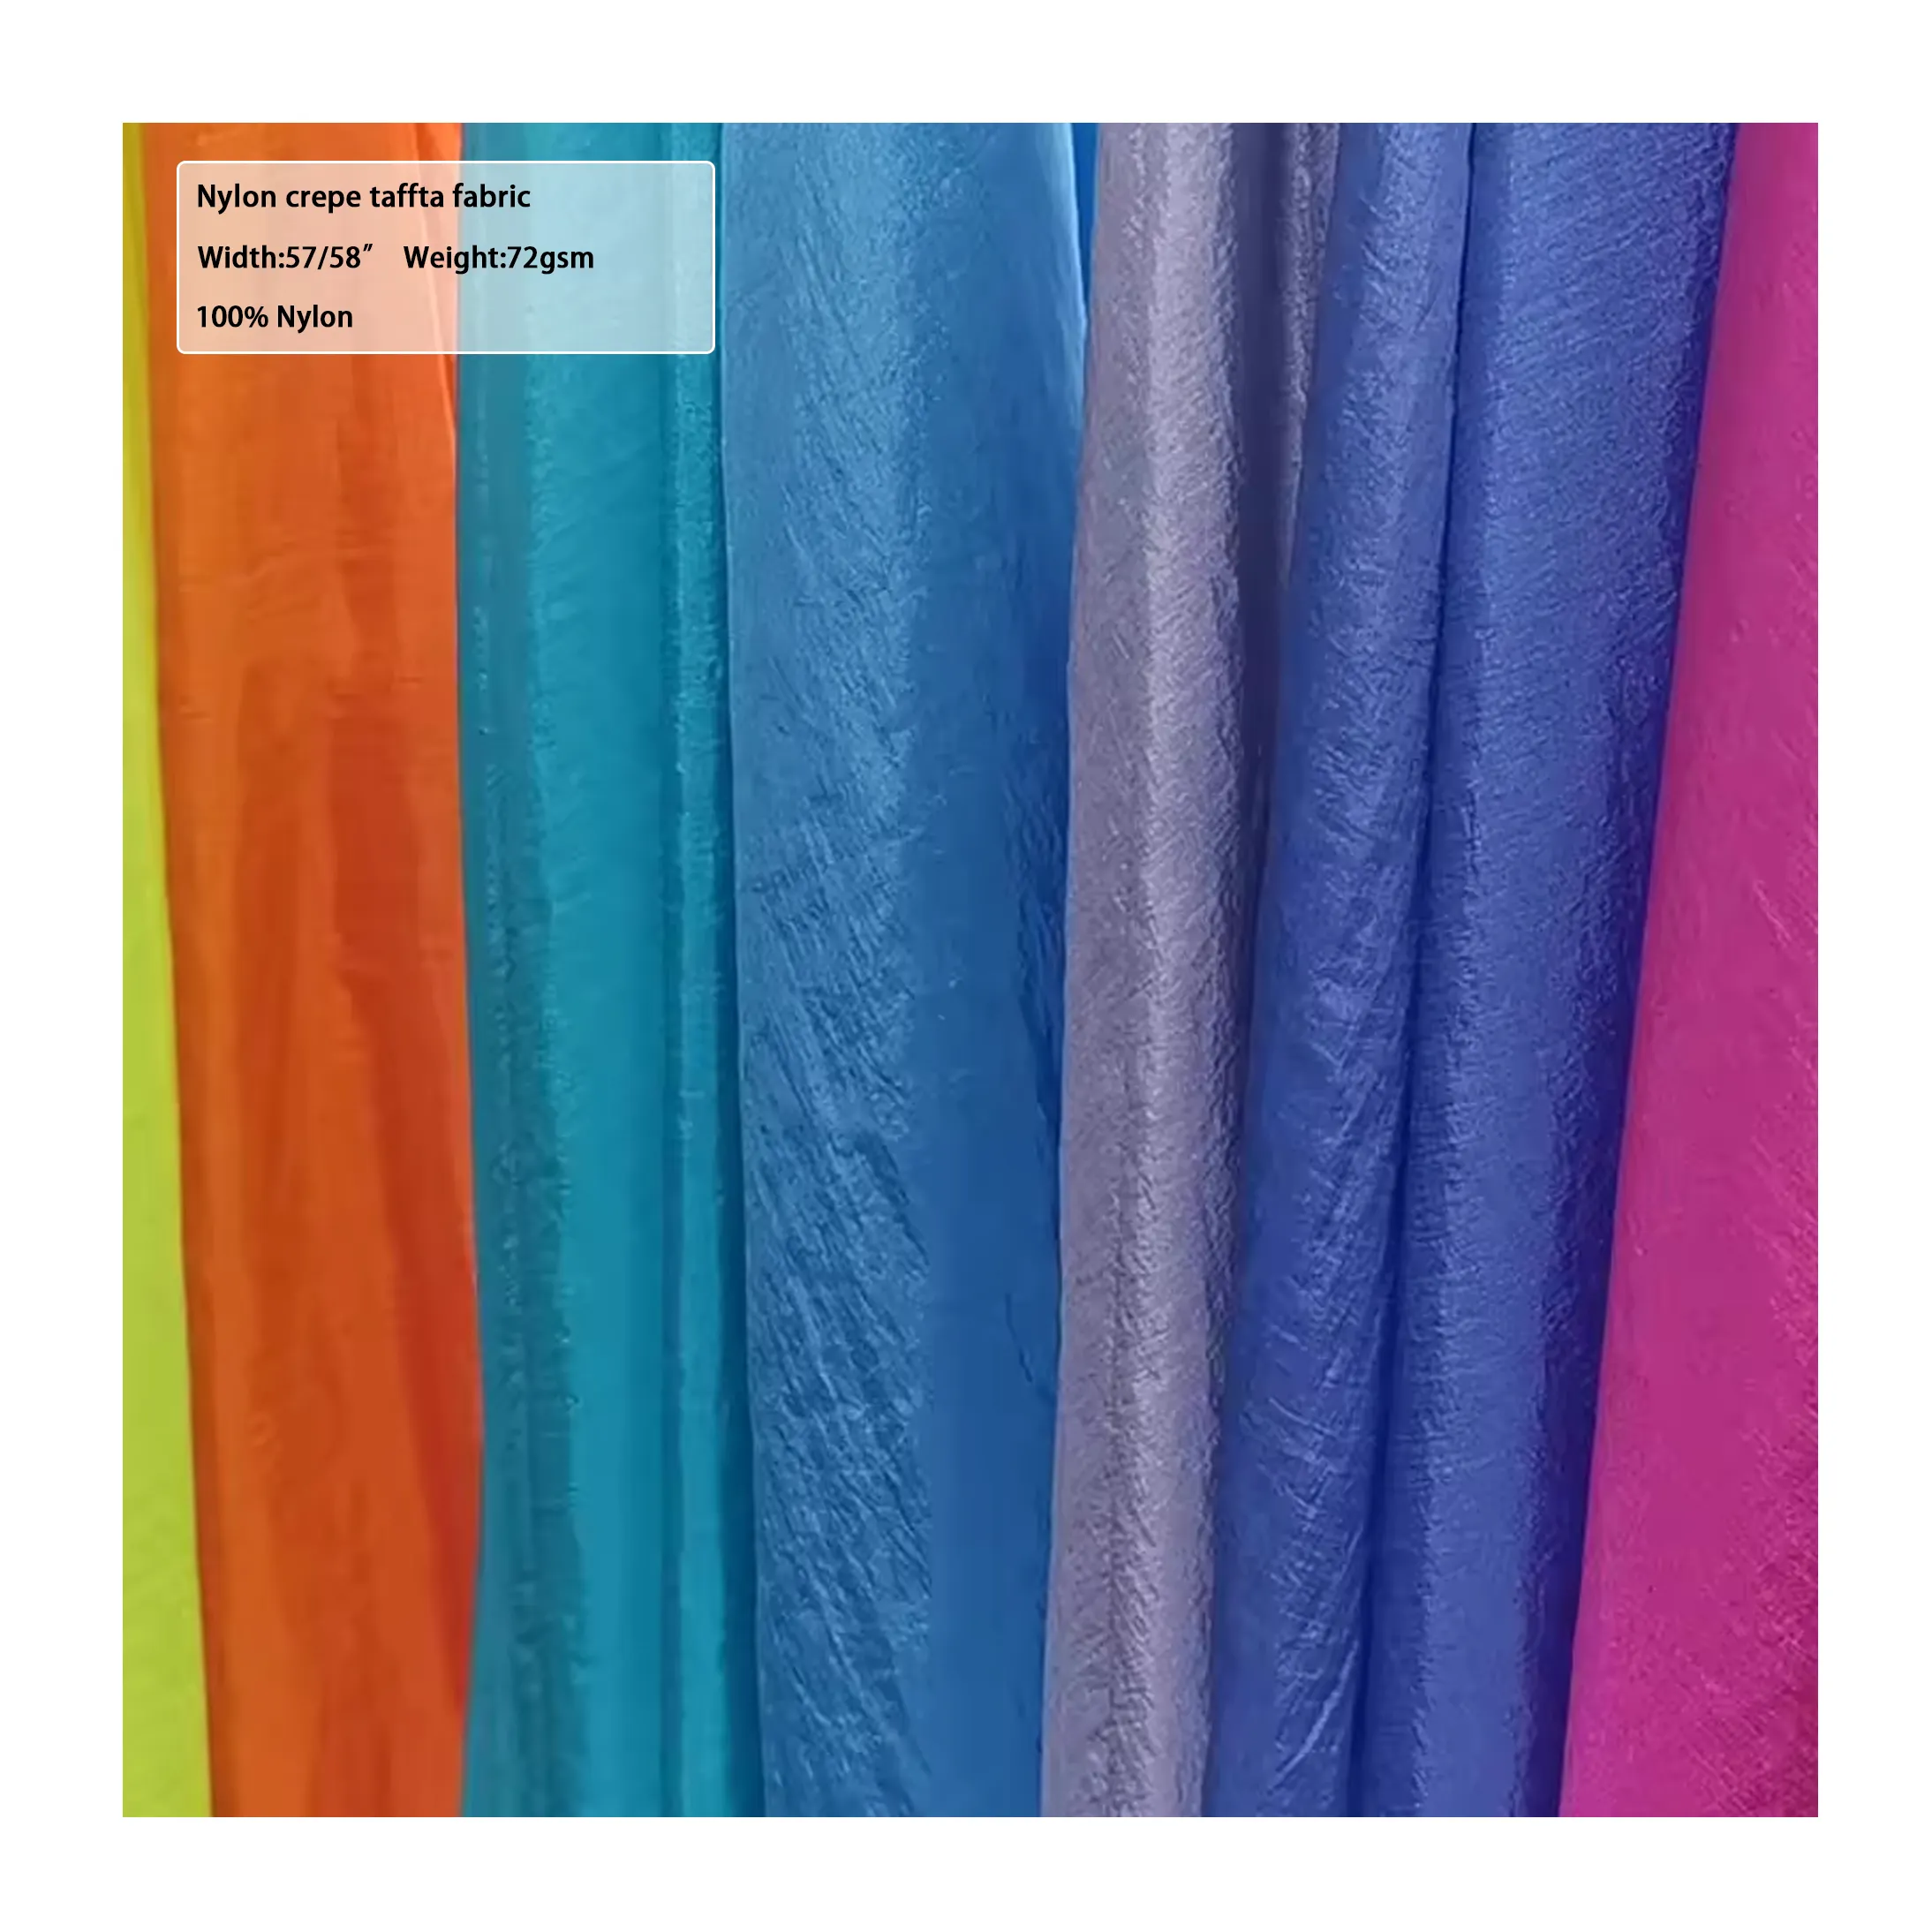 YiBi factory Wholesale woven waterproof bright ripstop taffeta fabric nylon crepe fabric for outdoor